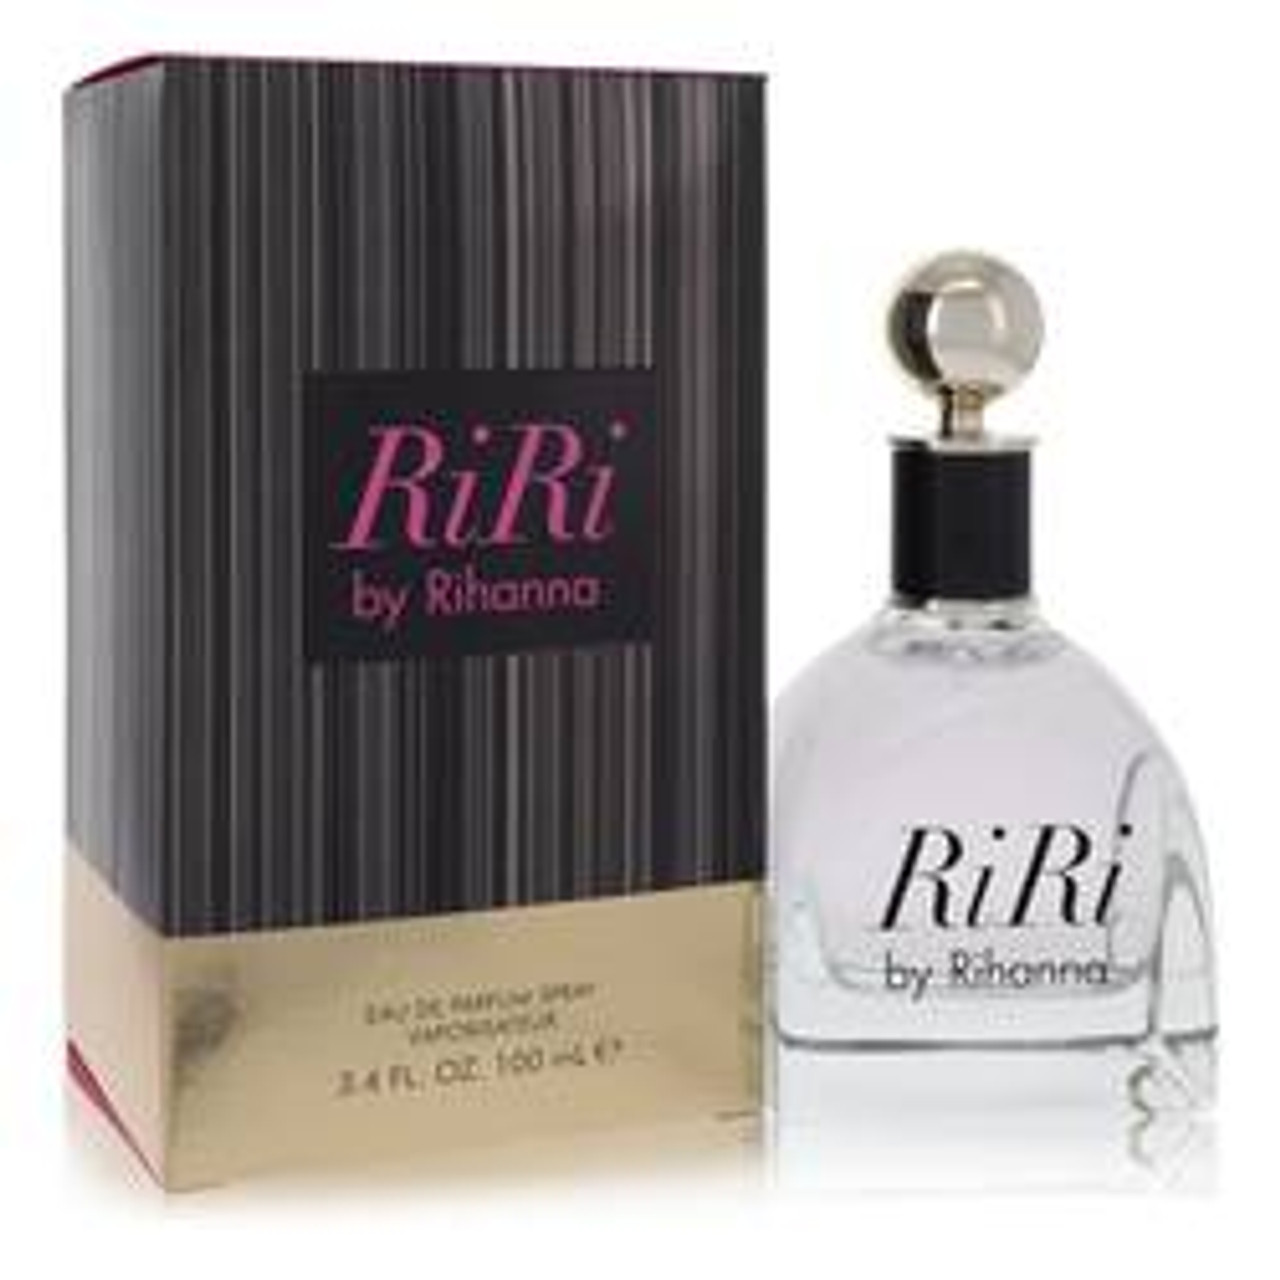 Ri Ri Perfume By Rihanna Eau De Parfum Spray 3.4 oz for Women - [From 88.00 - Choose pk Qty ] - *Ships from Miami